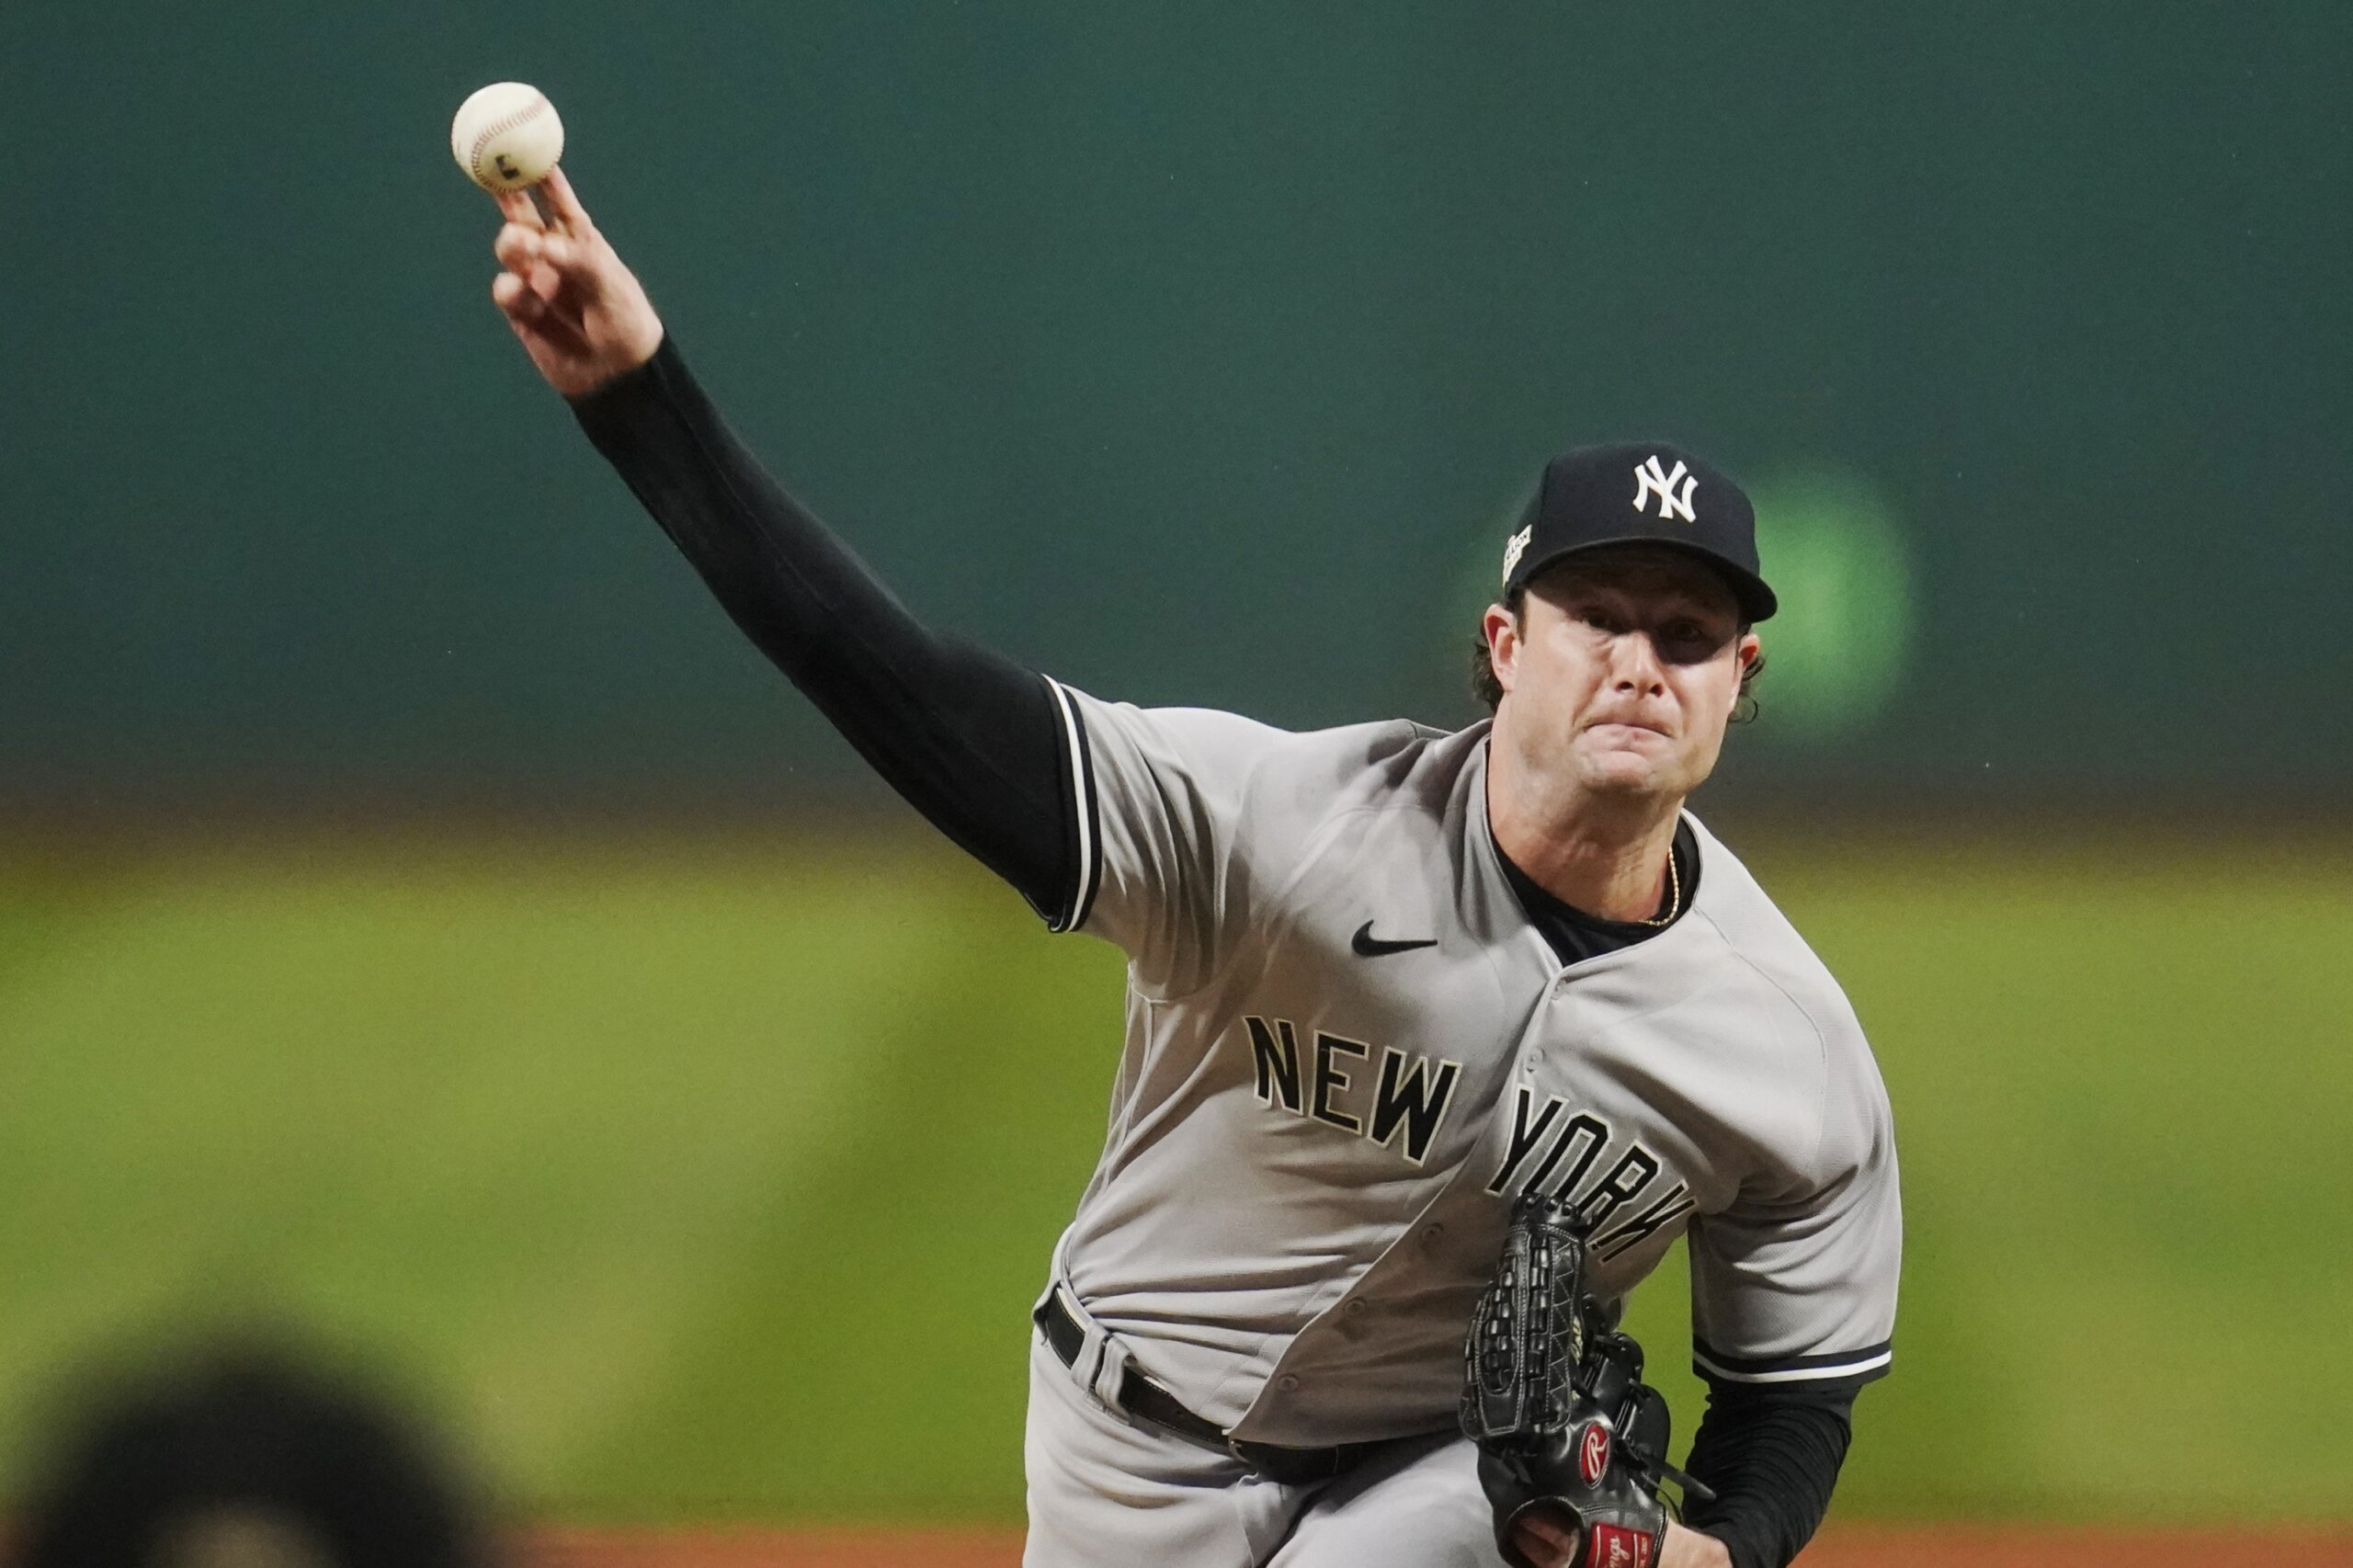 Mlb New York Yankees Aaron Judge Jersey - Xs : Target